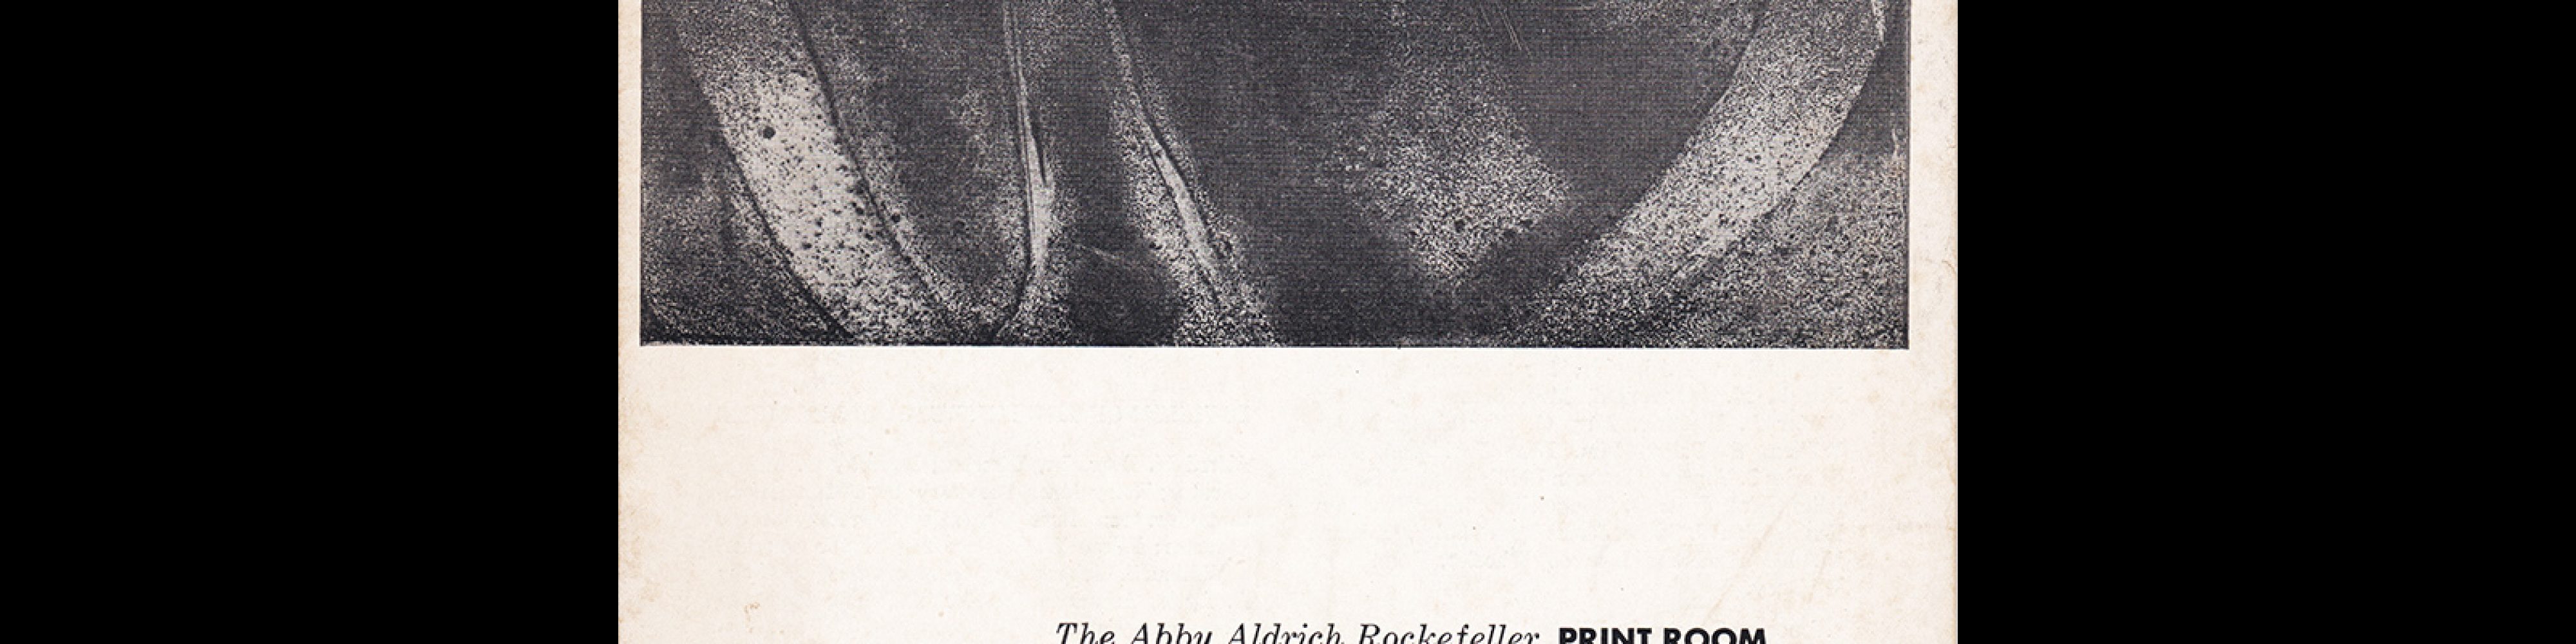 The Abby Aldrich Rockefeller Print Room 1949-1958, Museum of Modern Art, 1958